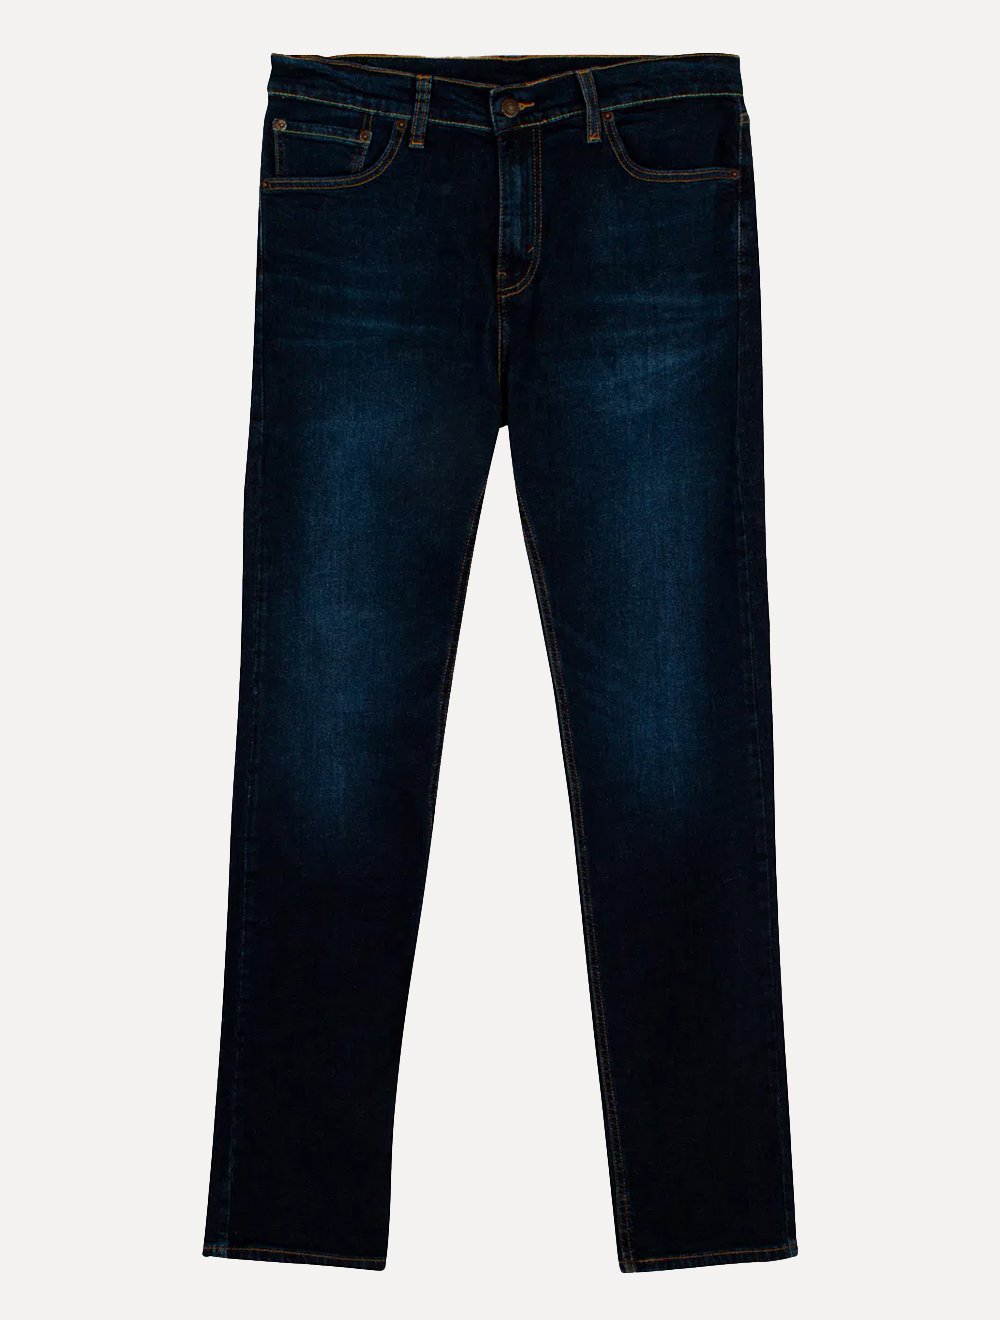 Calça Levis Jeans Masculina 505 Regular Dark Blue Escura